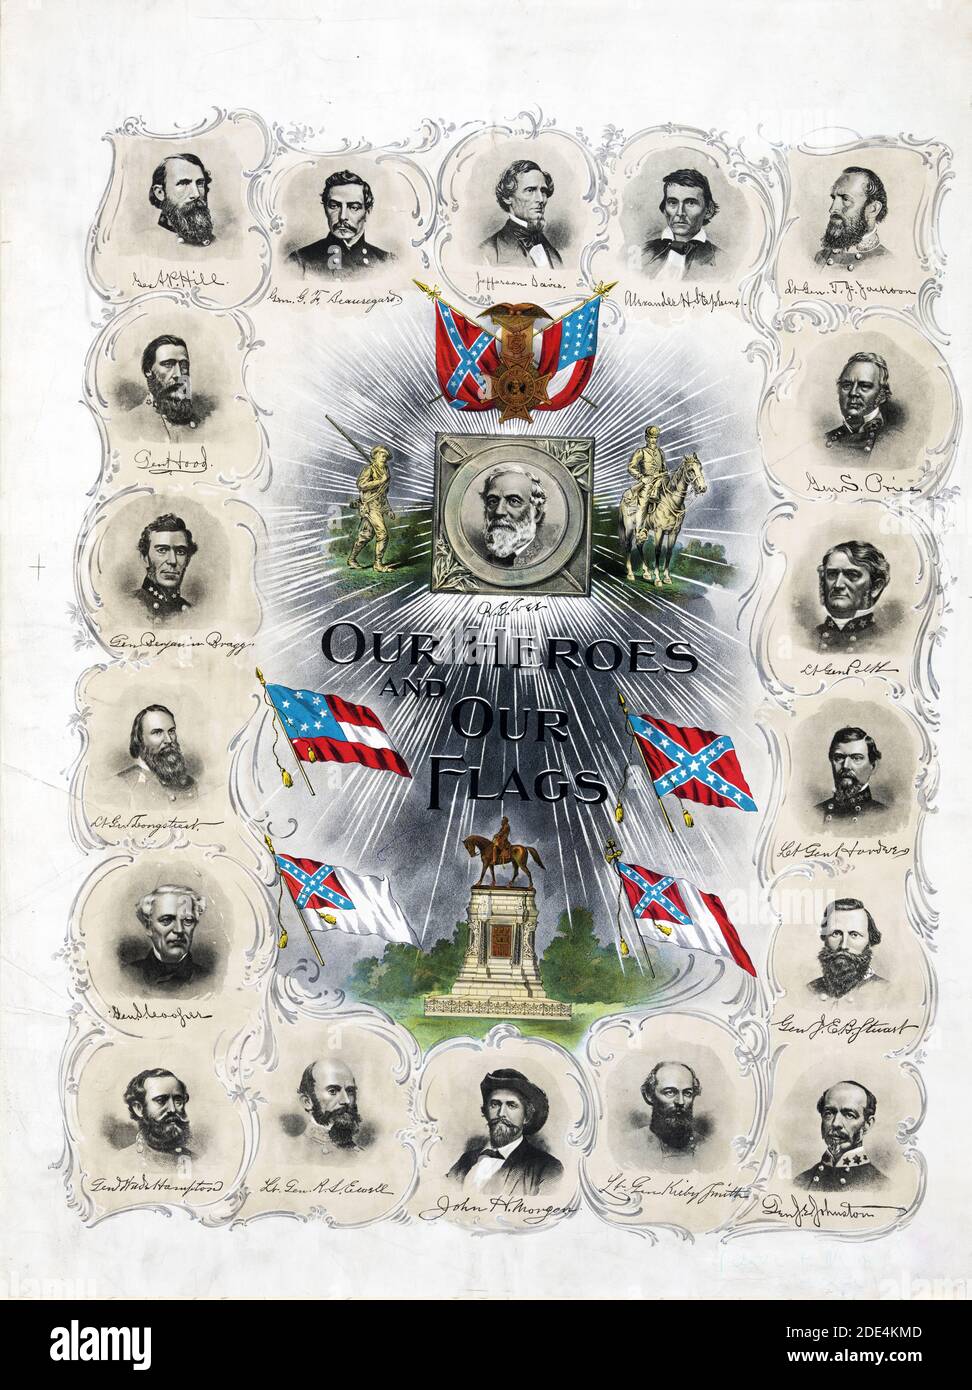 Memorial print for the Confederacy, published 30 years after the end of the American Civil War. Portraits, clockwise from top center, of 'Jefferson Davis, Alexander H. Stephens, Lt. Gen. T.J. [Stonewall] Jackson, Gen. S. Price, Lt. Gen. Polk, Lt. Gen. Hardee, Gen J.E.B. Stuart, Gen. J.E. Johnston, Lt. Gen. Kirby Smith, John H. Morgan, Lt. Gen. R.S. Ewell, Gen. Wade Hampton, Gen. S. Cooper, Lt. Gen. Longstreet, Gen. Benjamin [i.e., Braxton] Bragg, Gen. Hood, Gen. A.P. Hill, [and] Gen. G.F. [i.e., G.T.] Beauregard,' surround the central image of Robert E. Lee, an equestrian statue, and four Conf Stock Photo